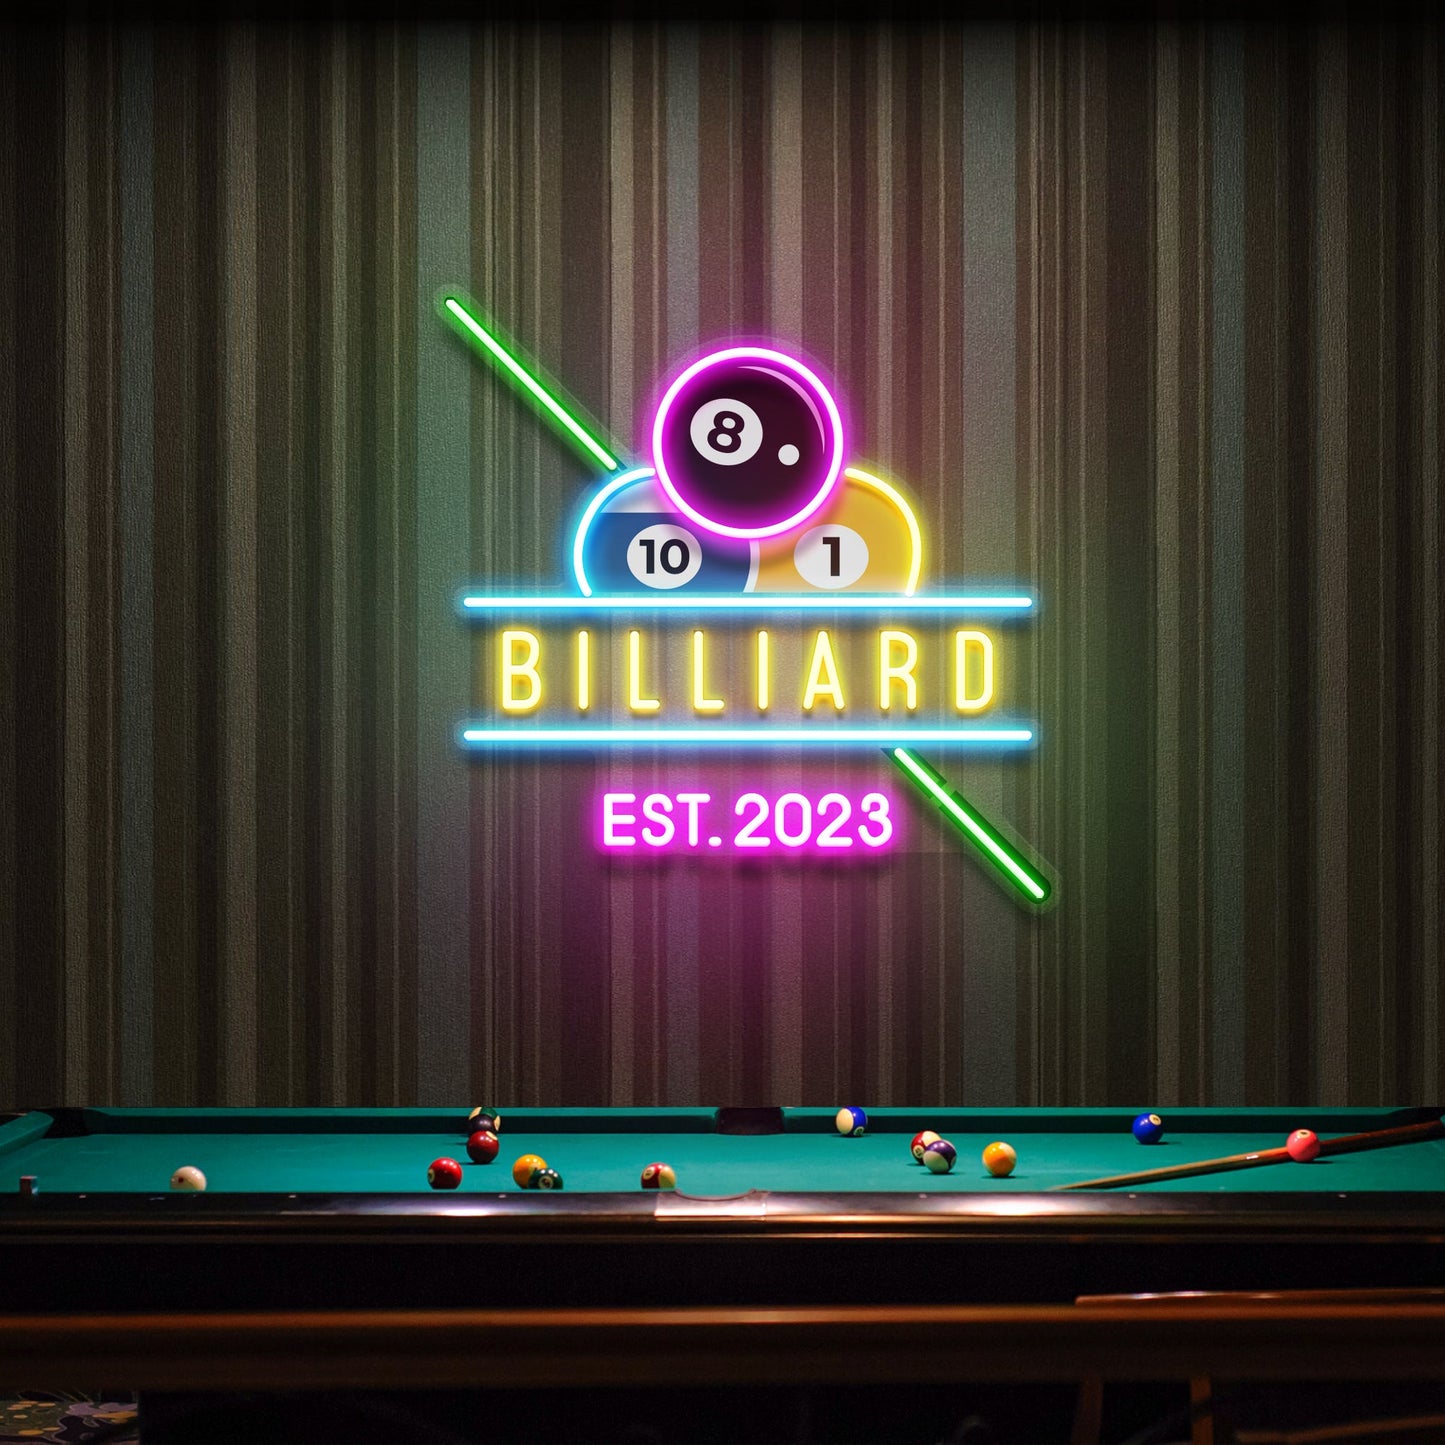 Billiards Pool Room Decor Artwork Led Neon Sign Light